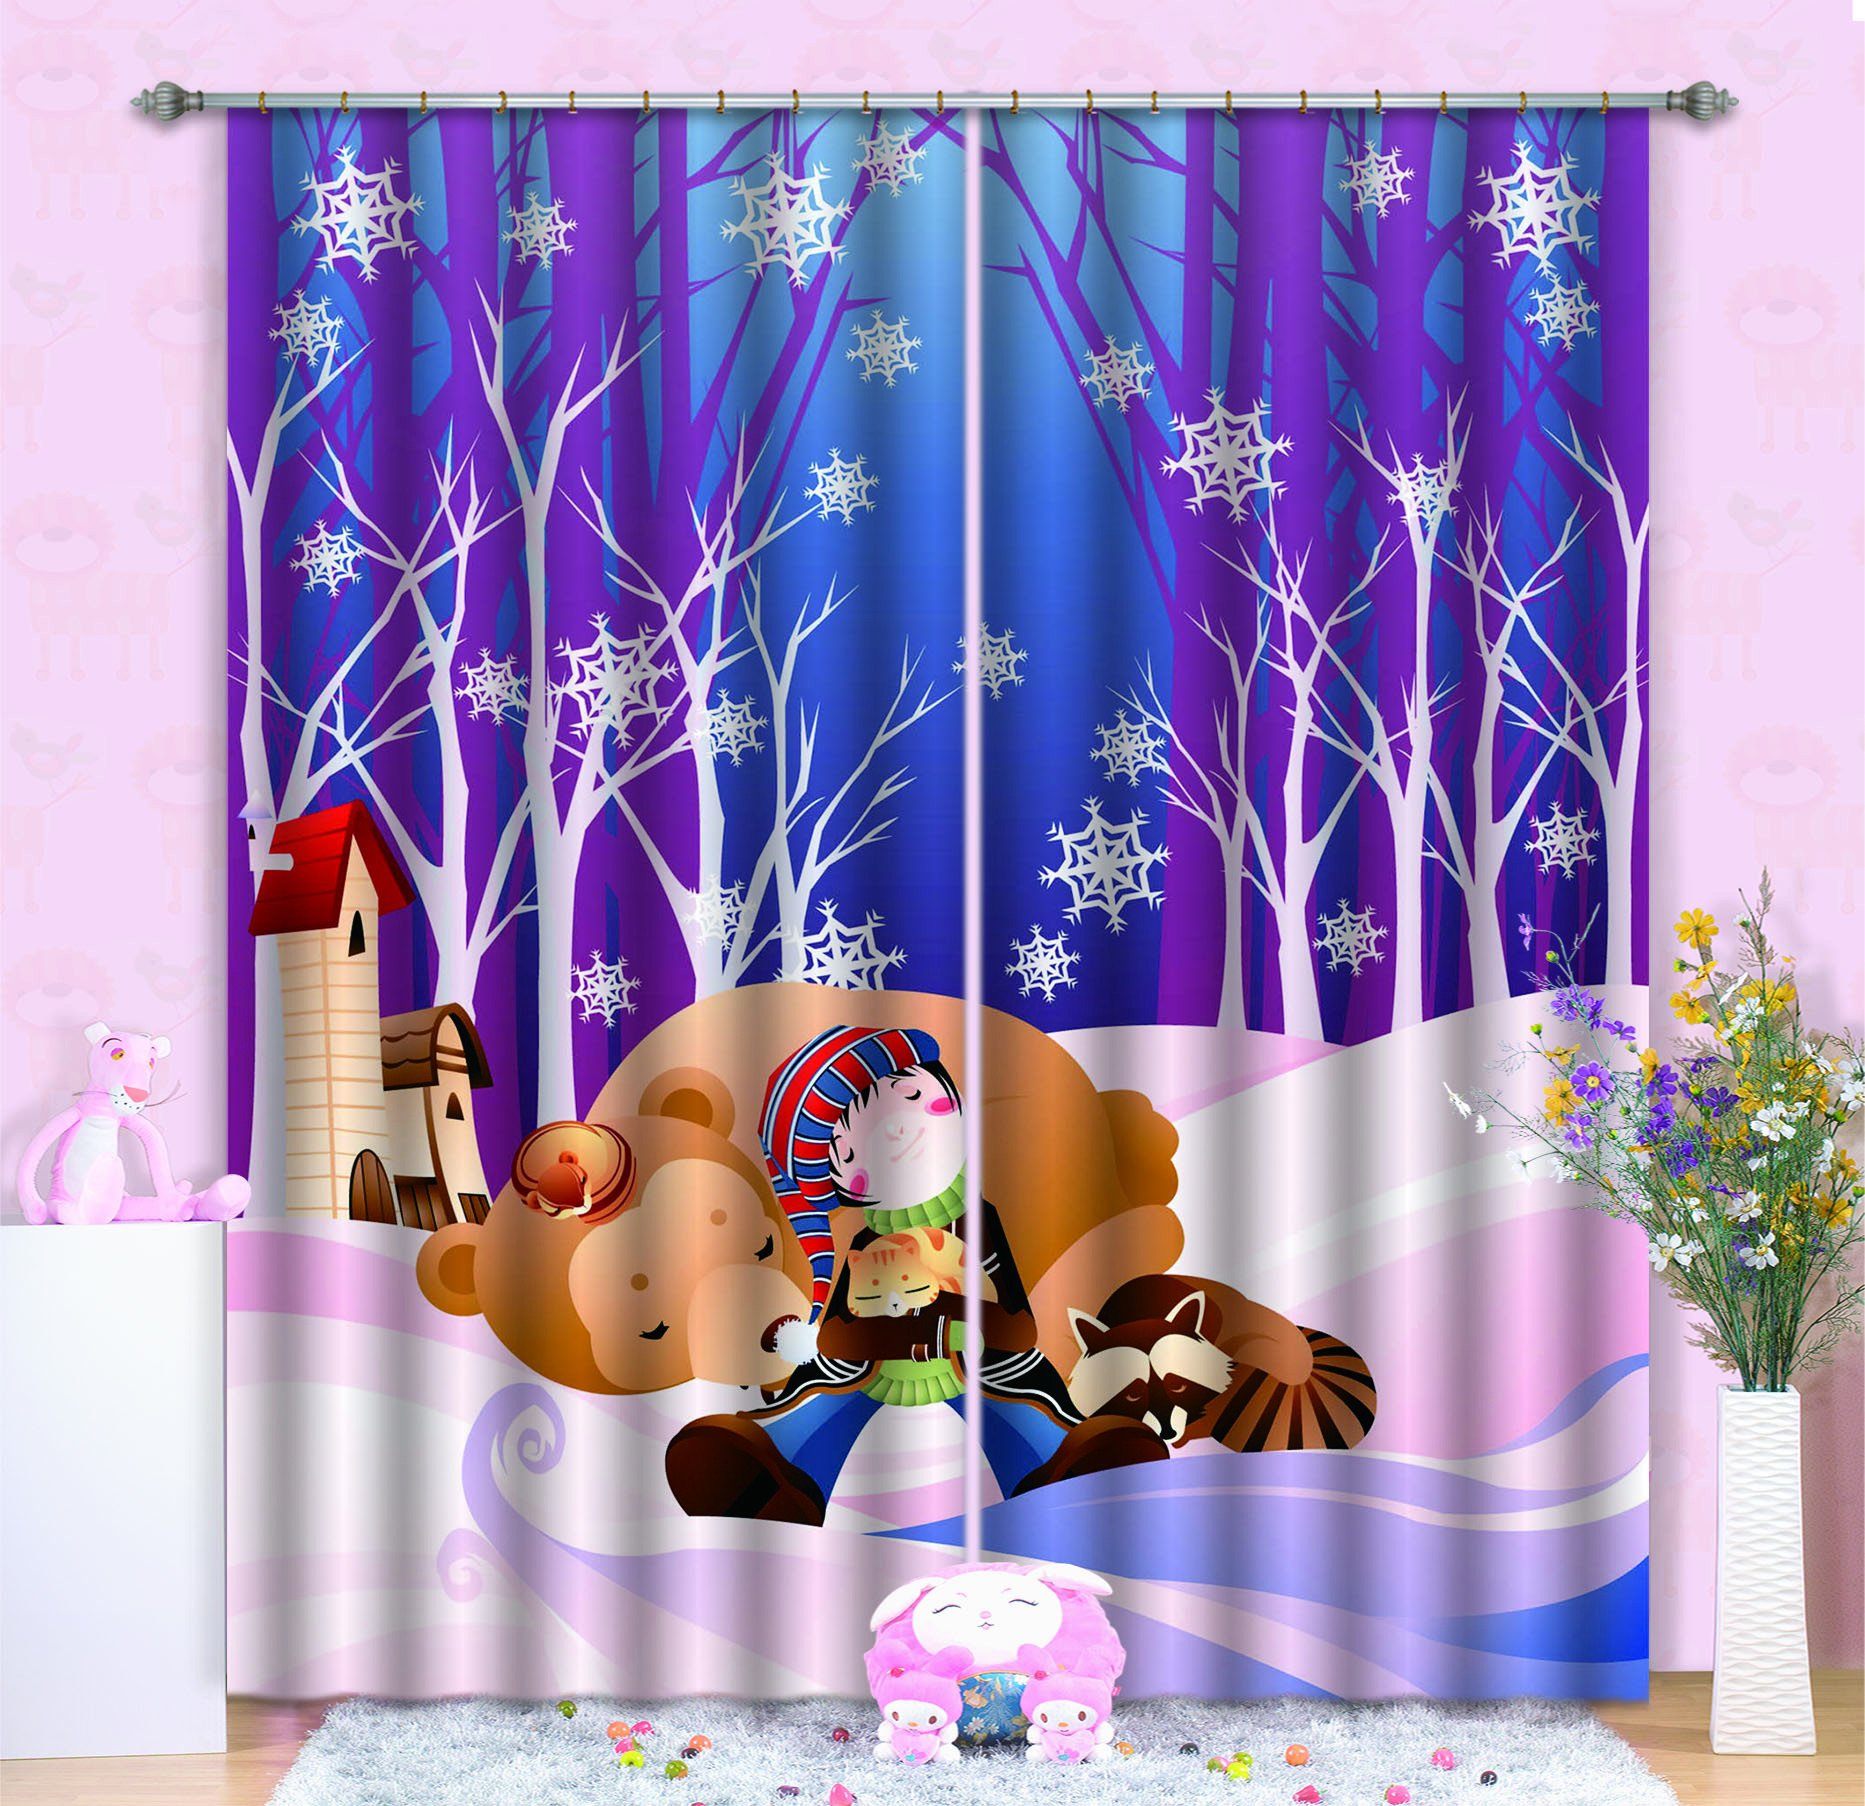 3D Kid Animals Friends 707 Curtains Drapes Wallpaper AJ Wallpaper 